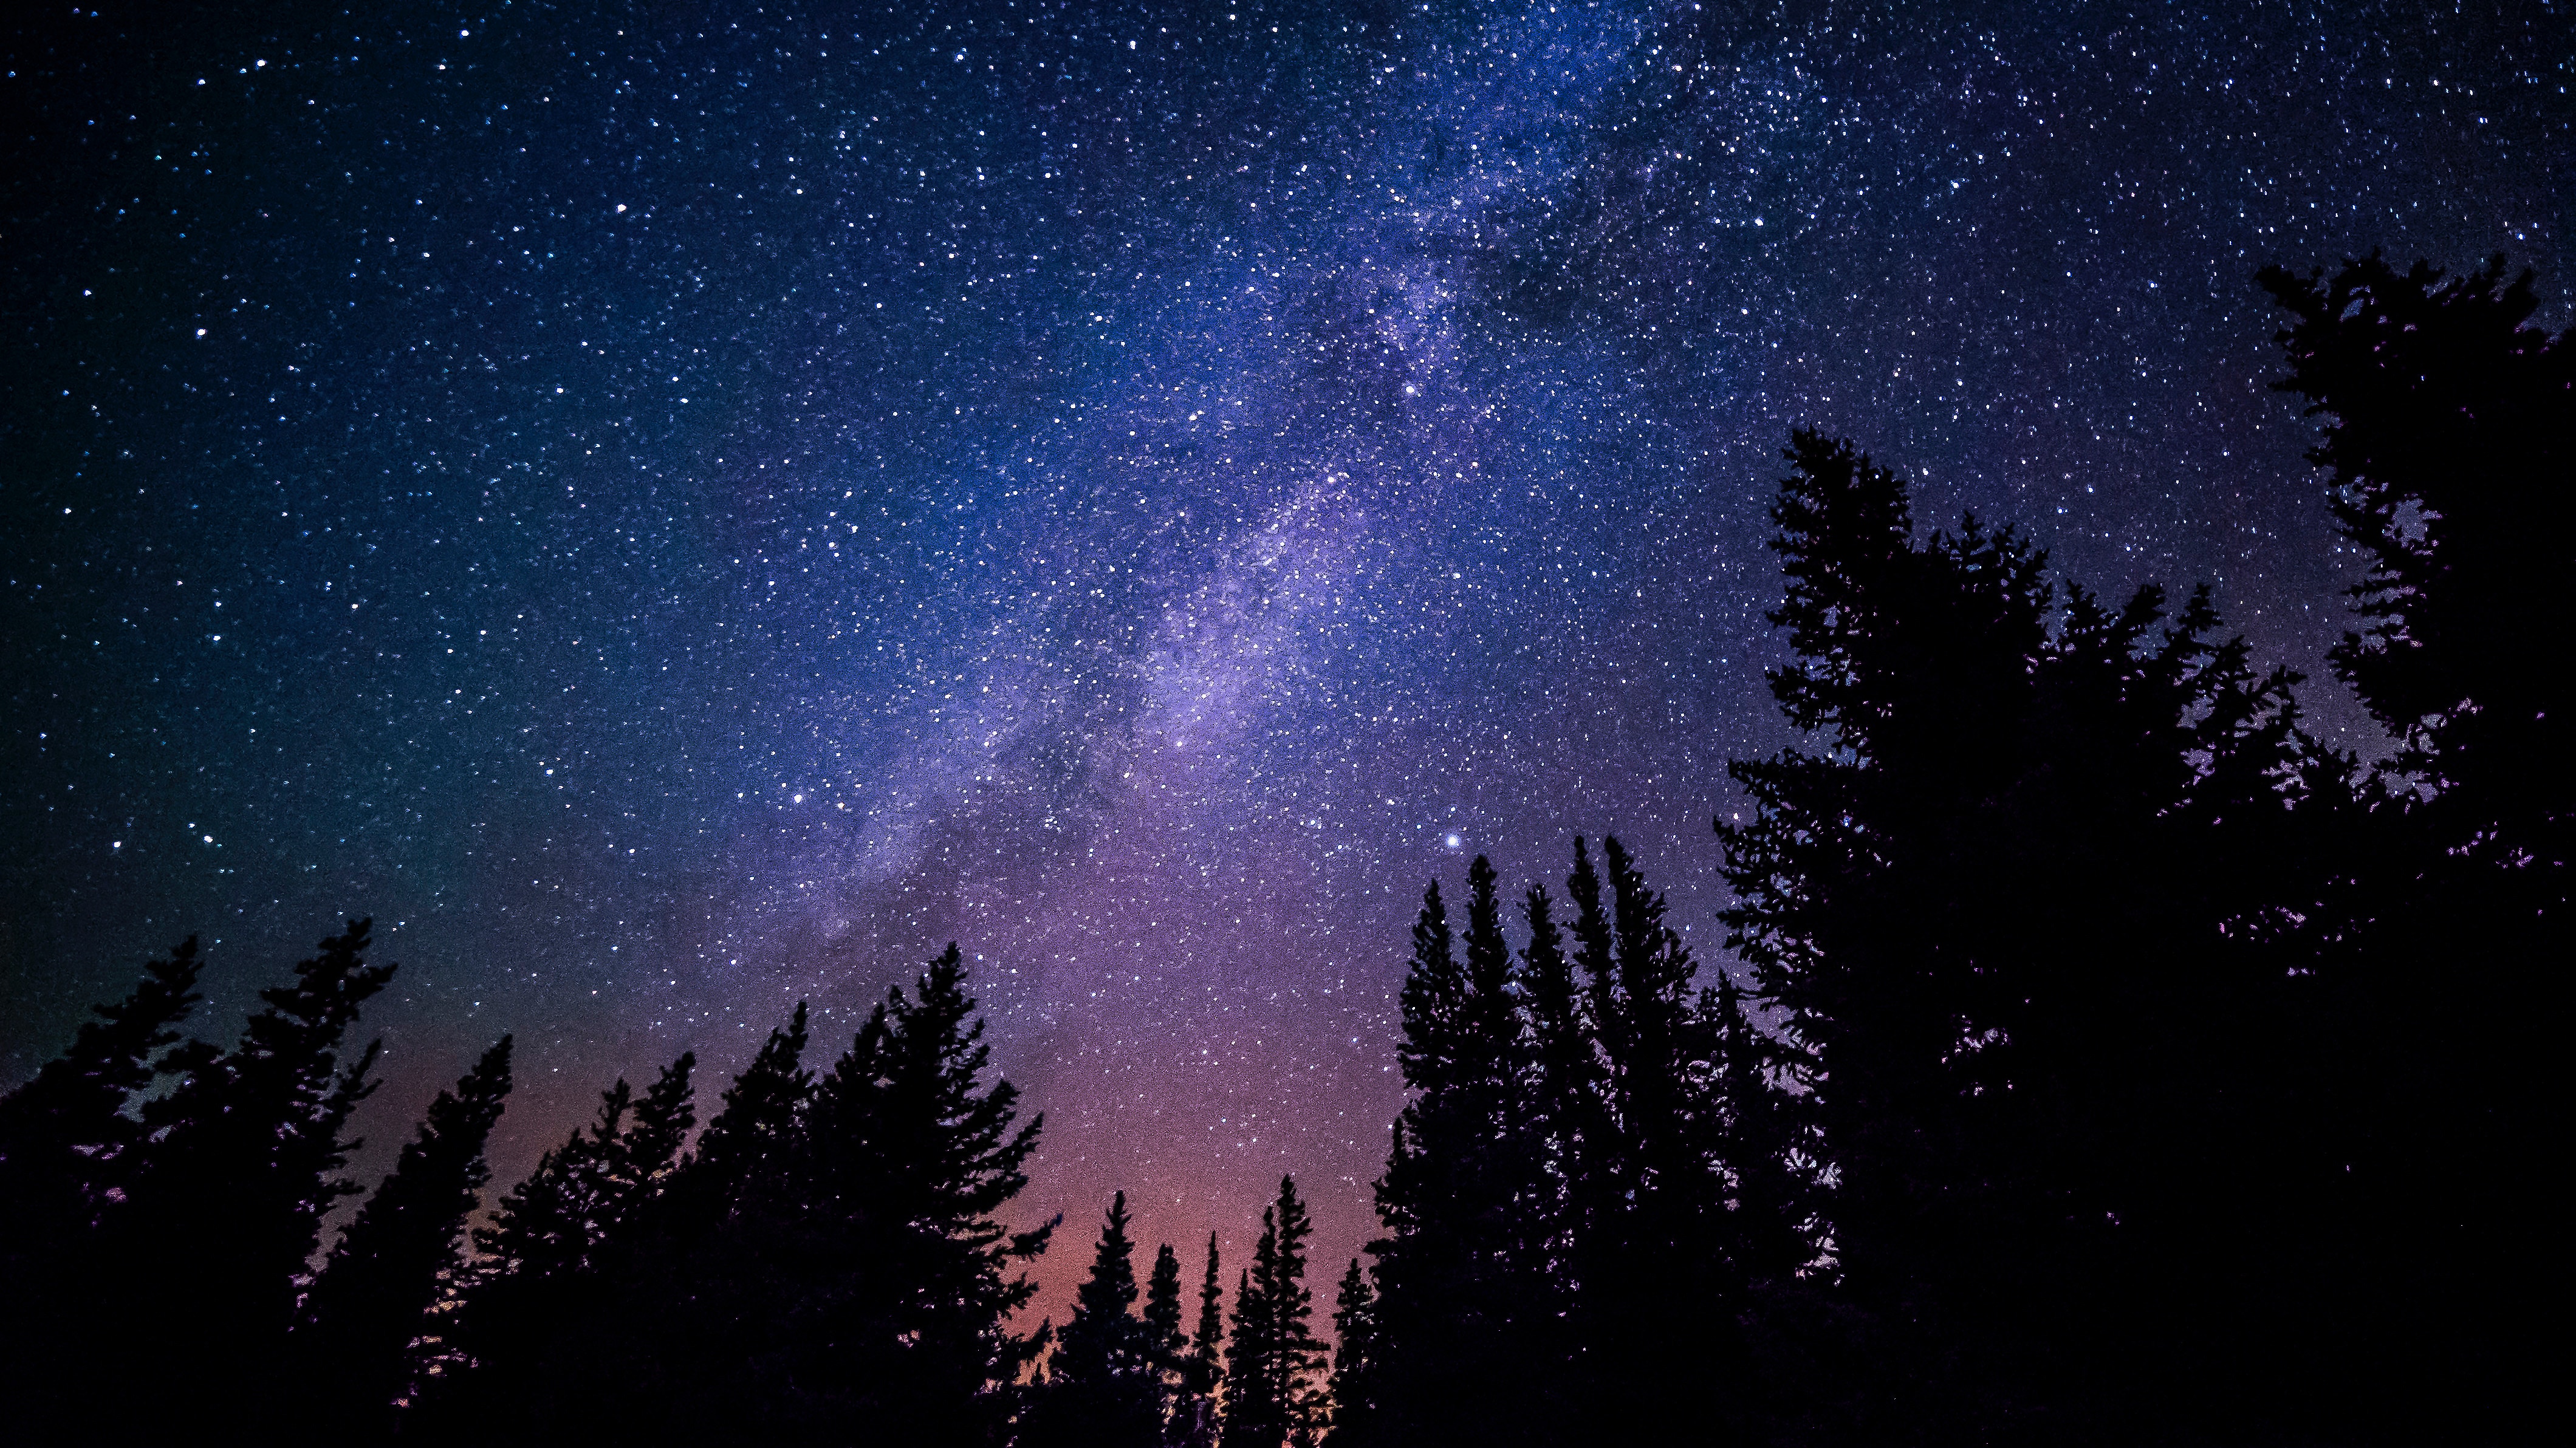 A starry night sky shows over the treeline.